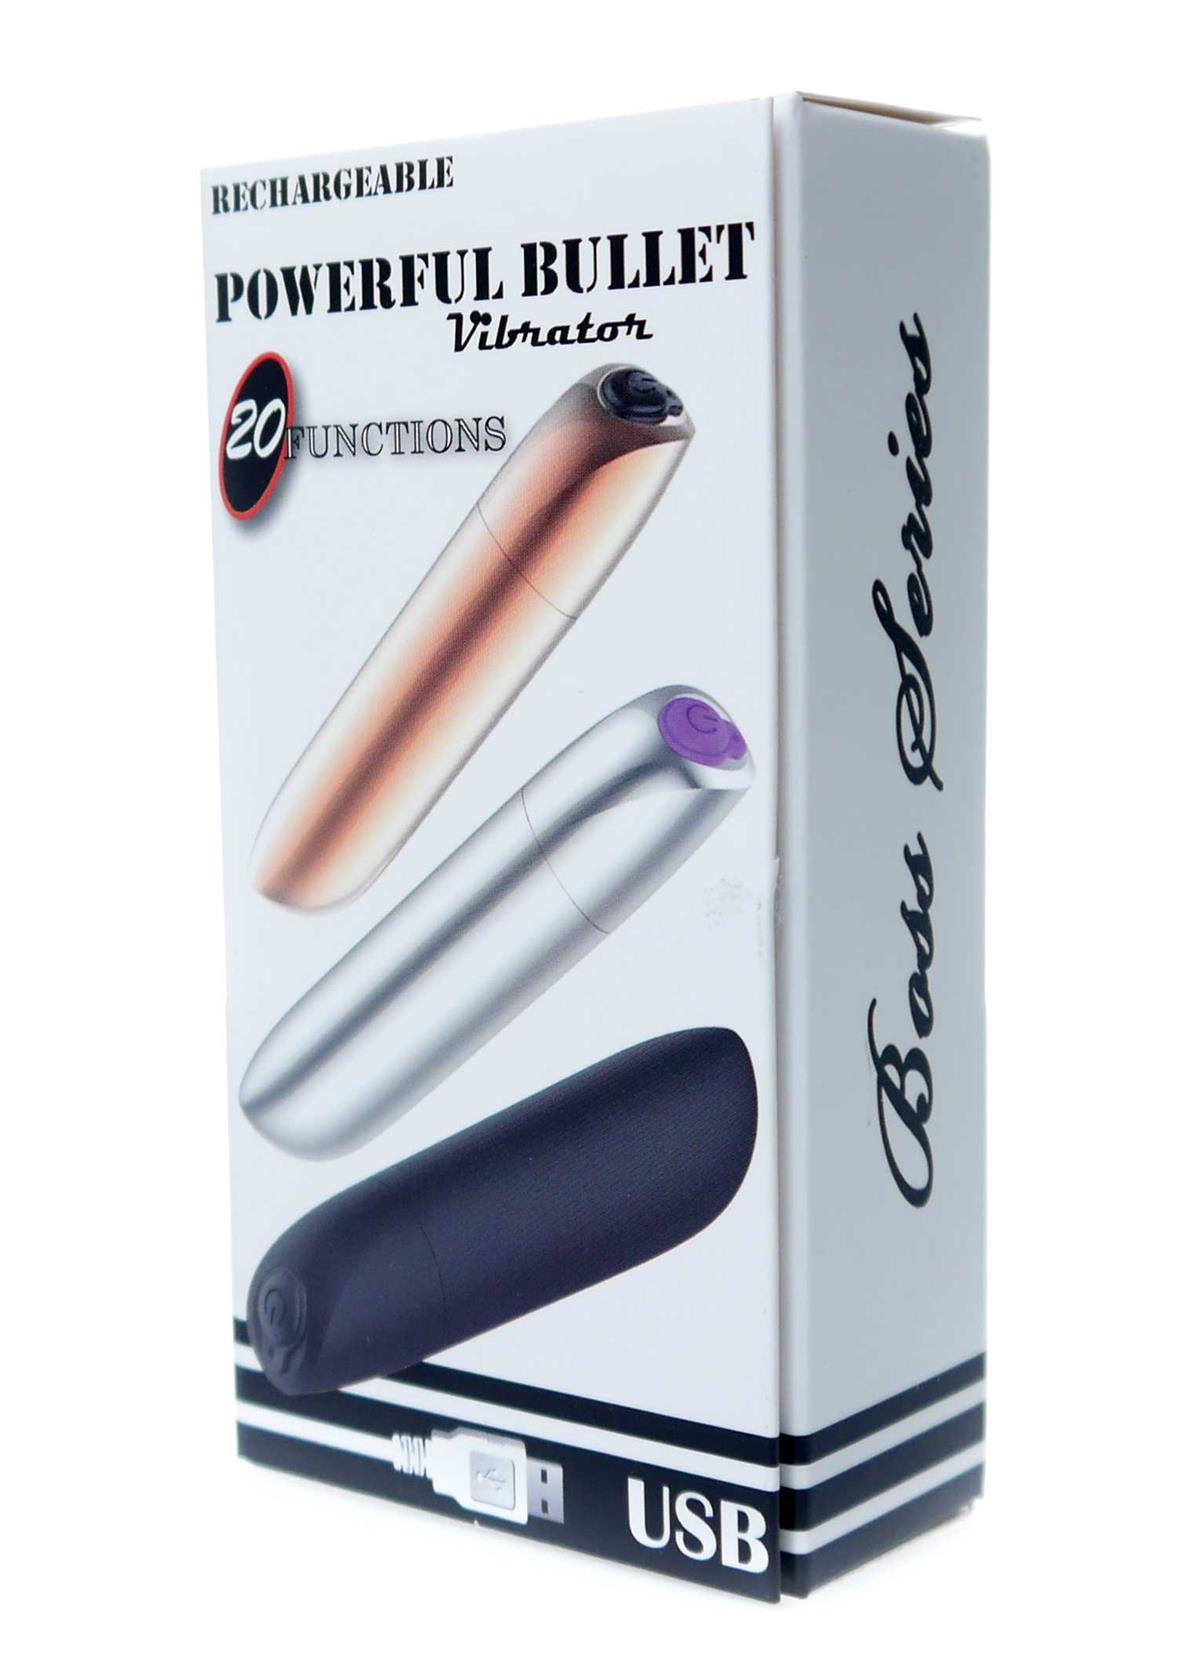 Bossoftoys - 22-00046 - Powerful Bullet Vibrator - USB rechargeable - 20 Functions - shiny Black